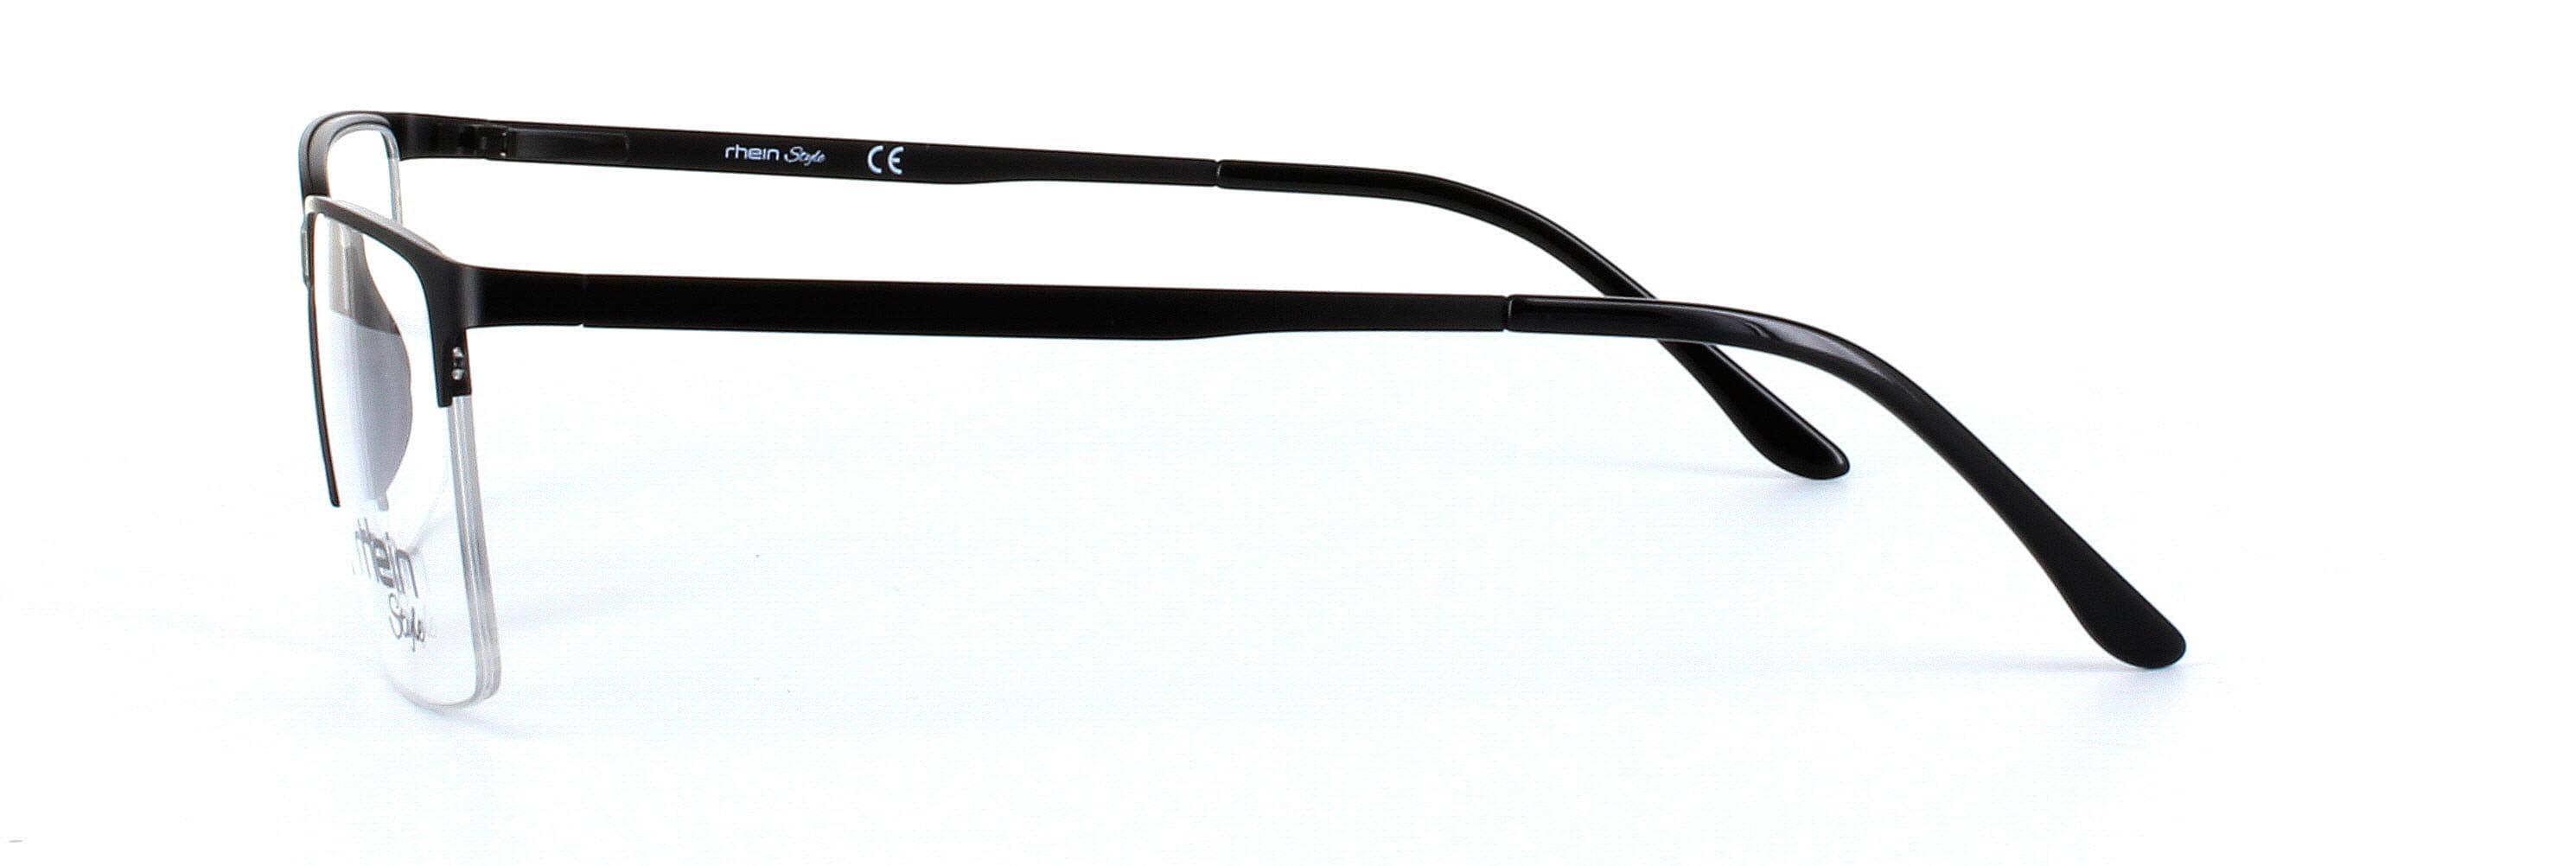 Hamilton Black Semi Rimless Rectangular Metal Glasses - Image View 2